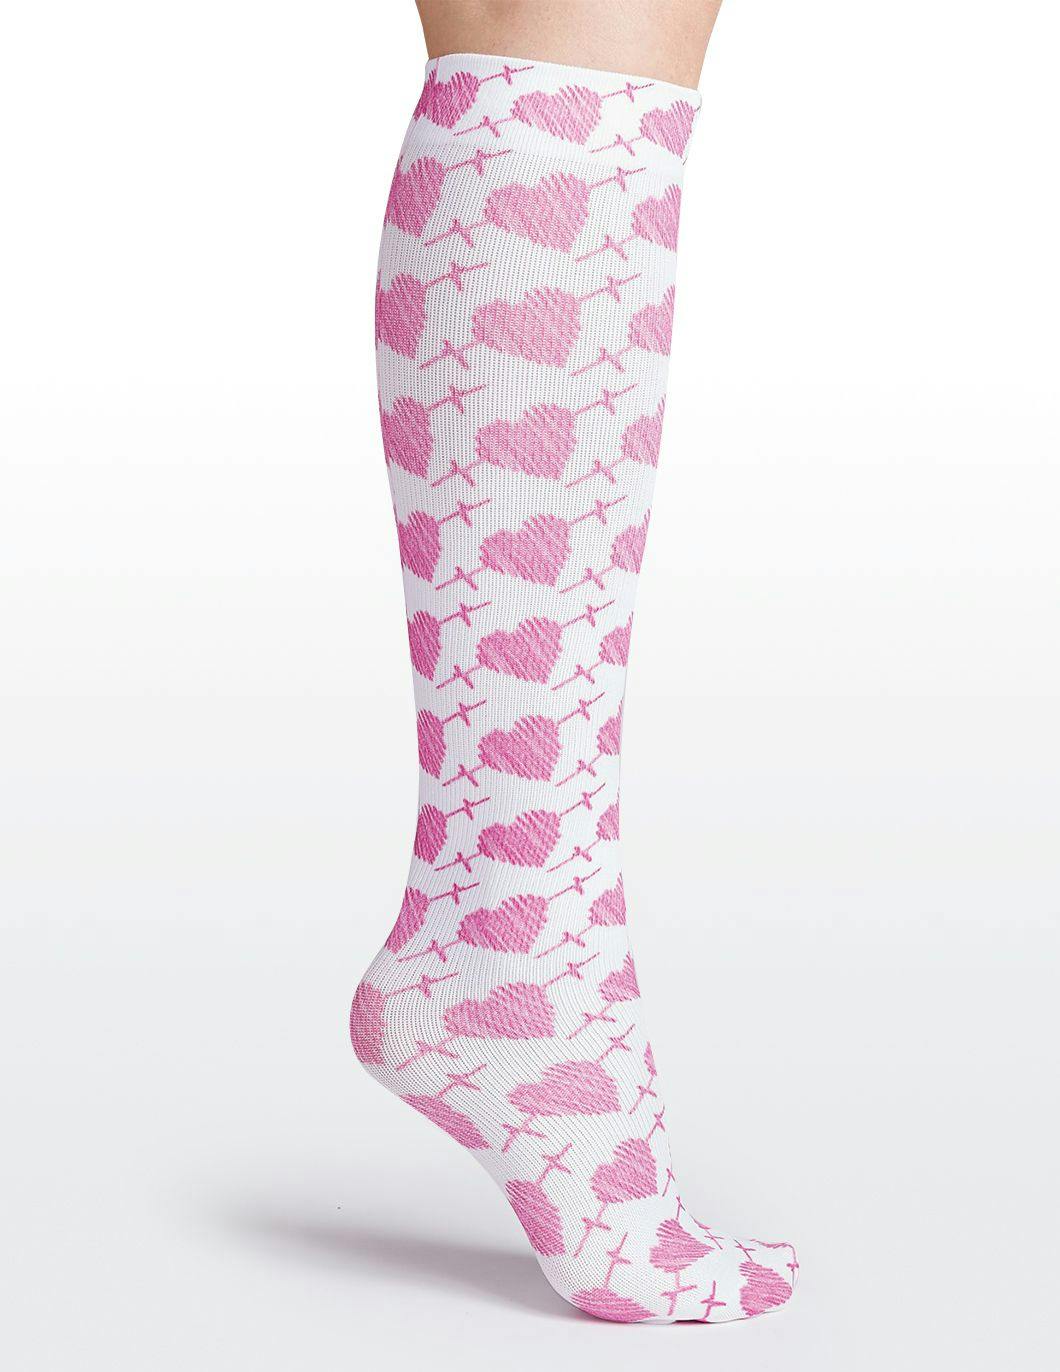 cutieful-compression-socks-8-15-mmhg-ekg-hearts-print